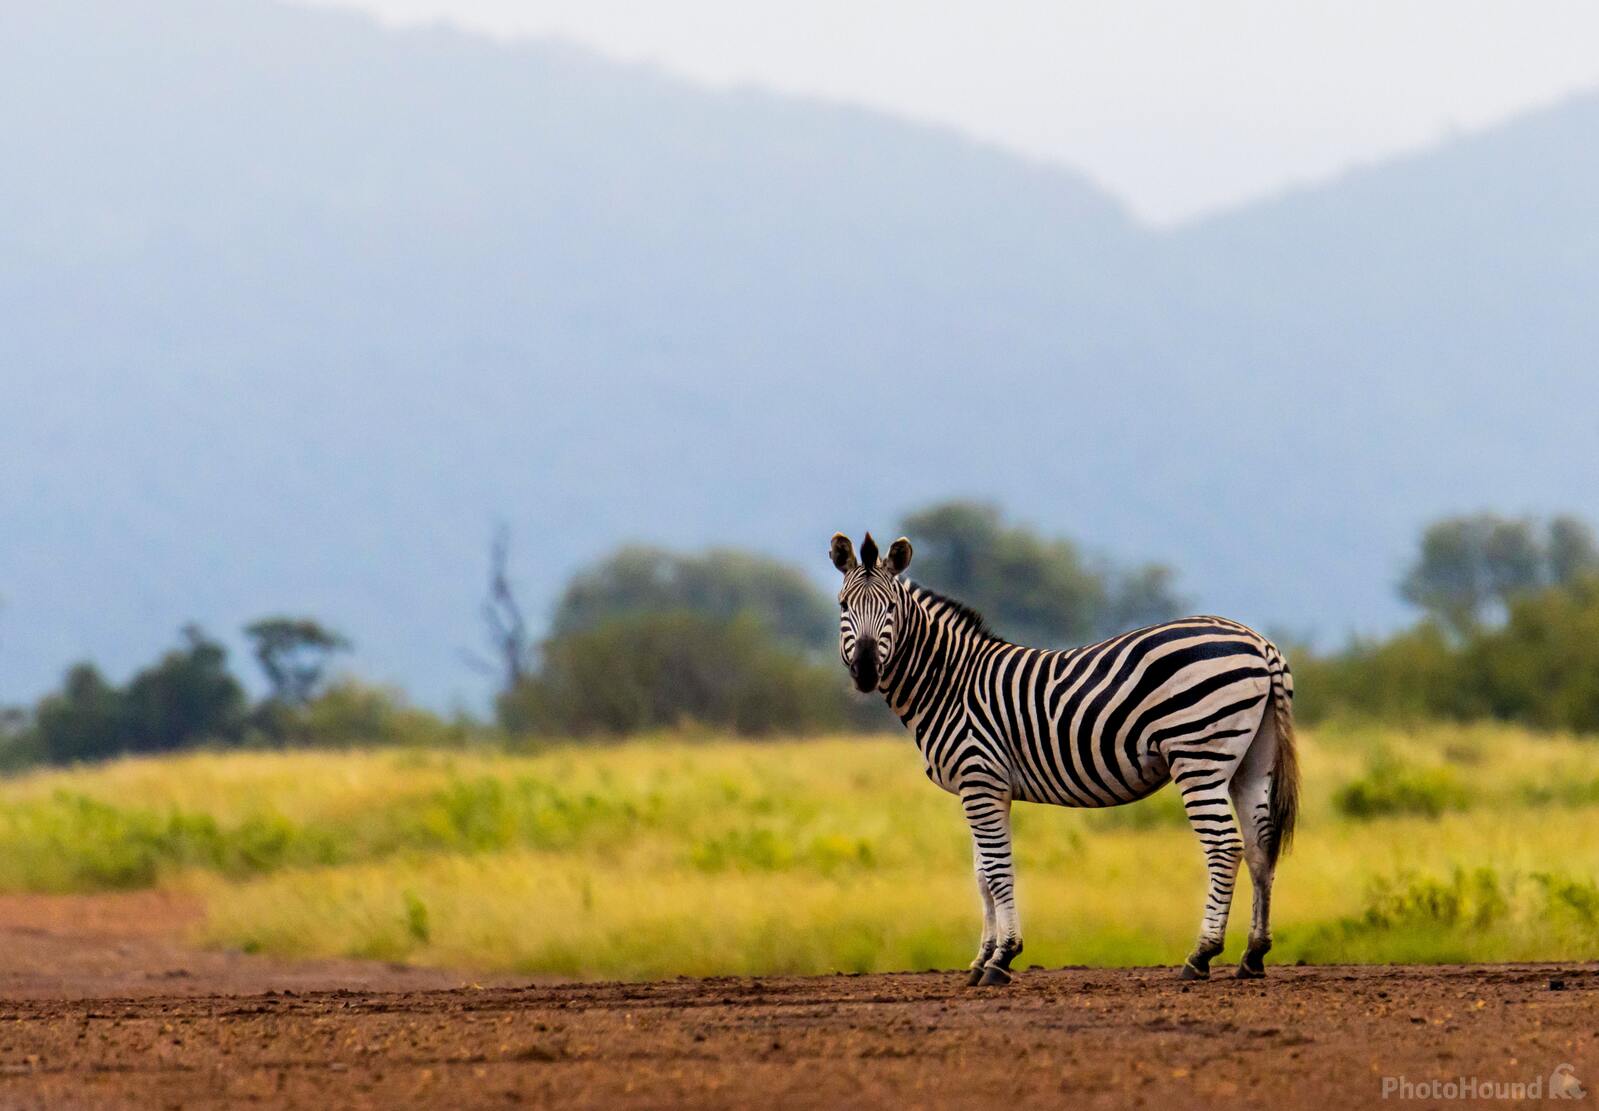 Image of Madikwe Game Reserve by Team PhotoHound